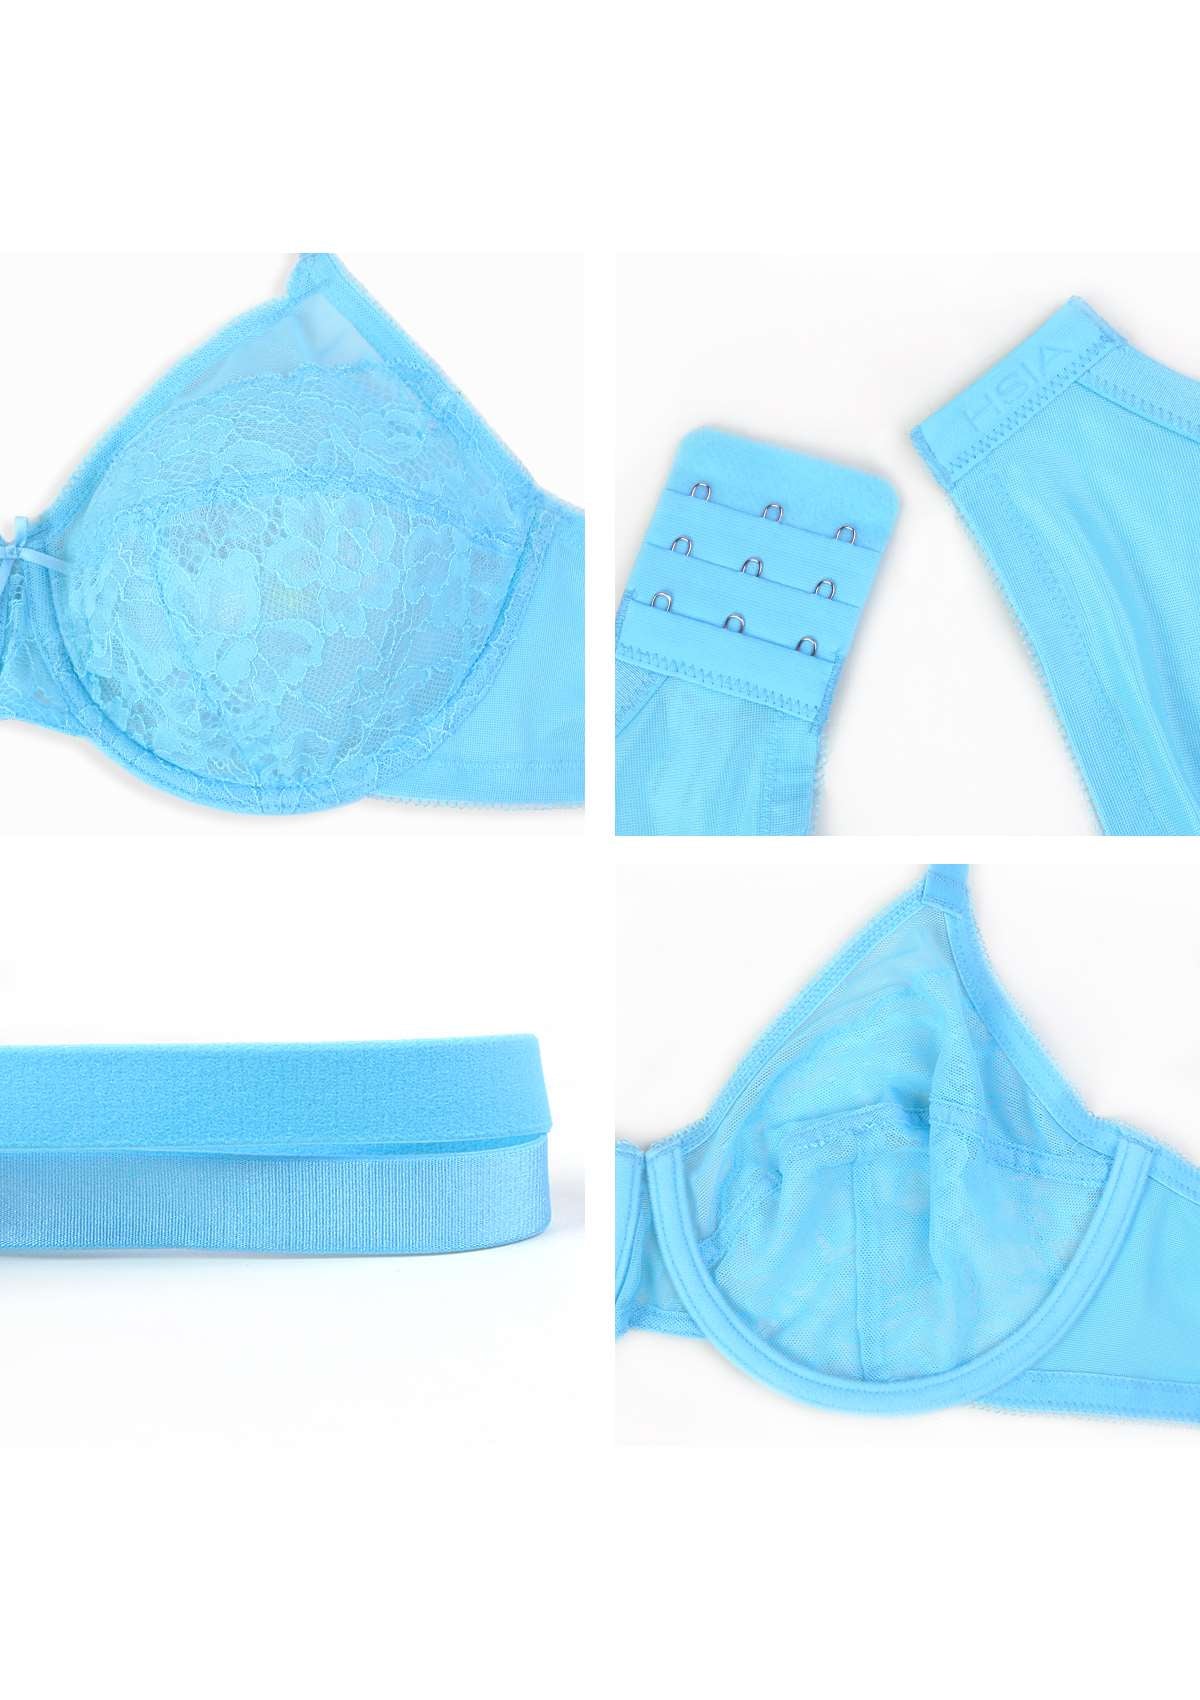 HSIA Enchante Minimizer Lace Bra: Full Support For Heavy Breasts - Capri Blue / 42 / G